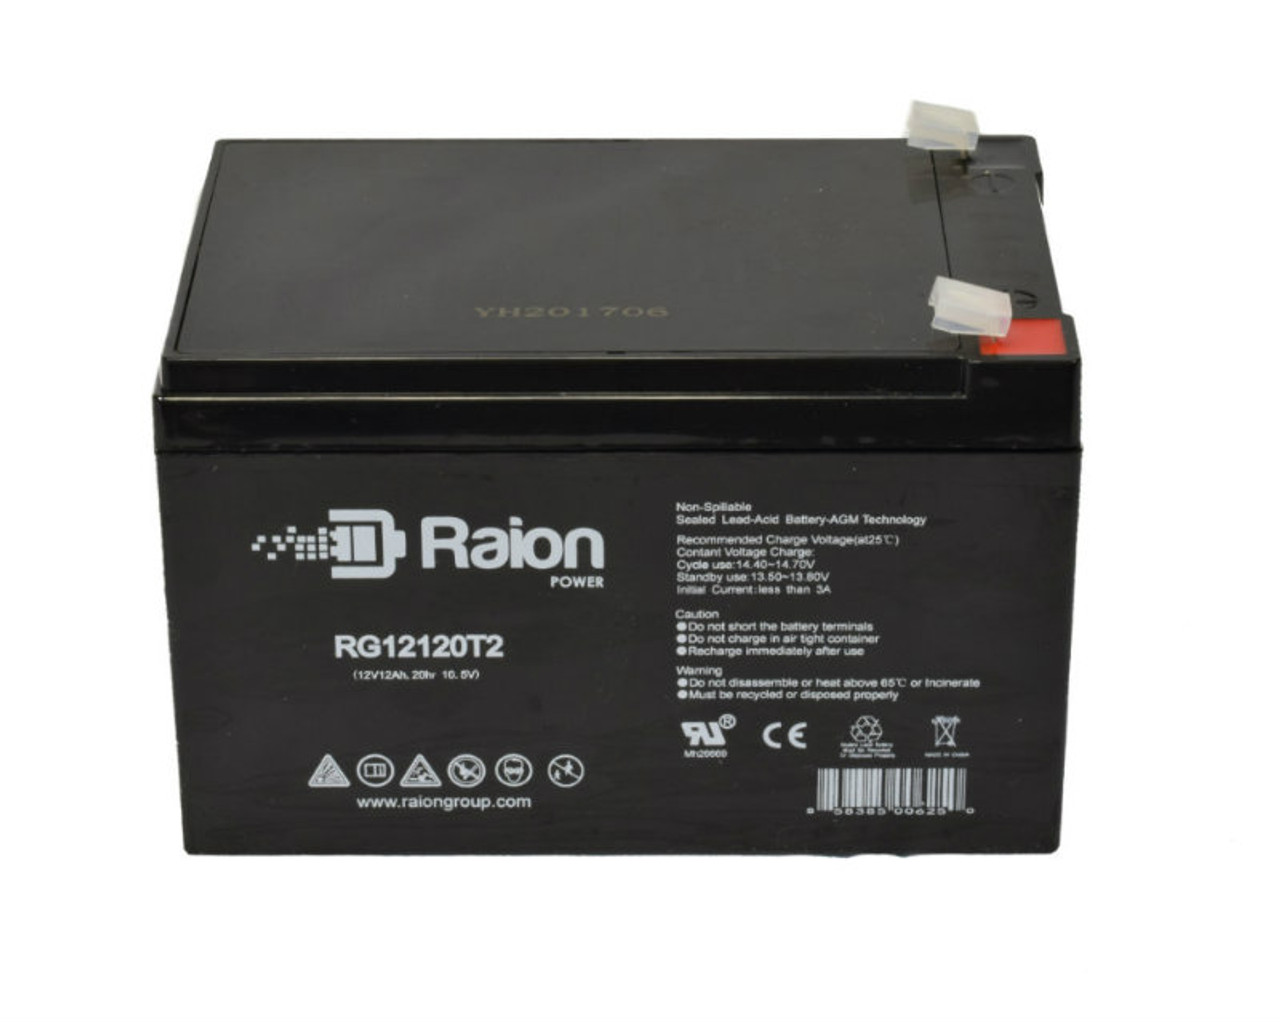 Raion Power RG12120T2 SLA Battery for Amego Cyclone